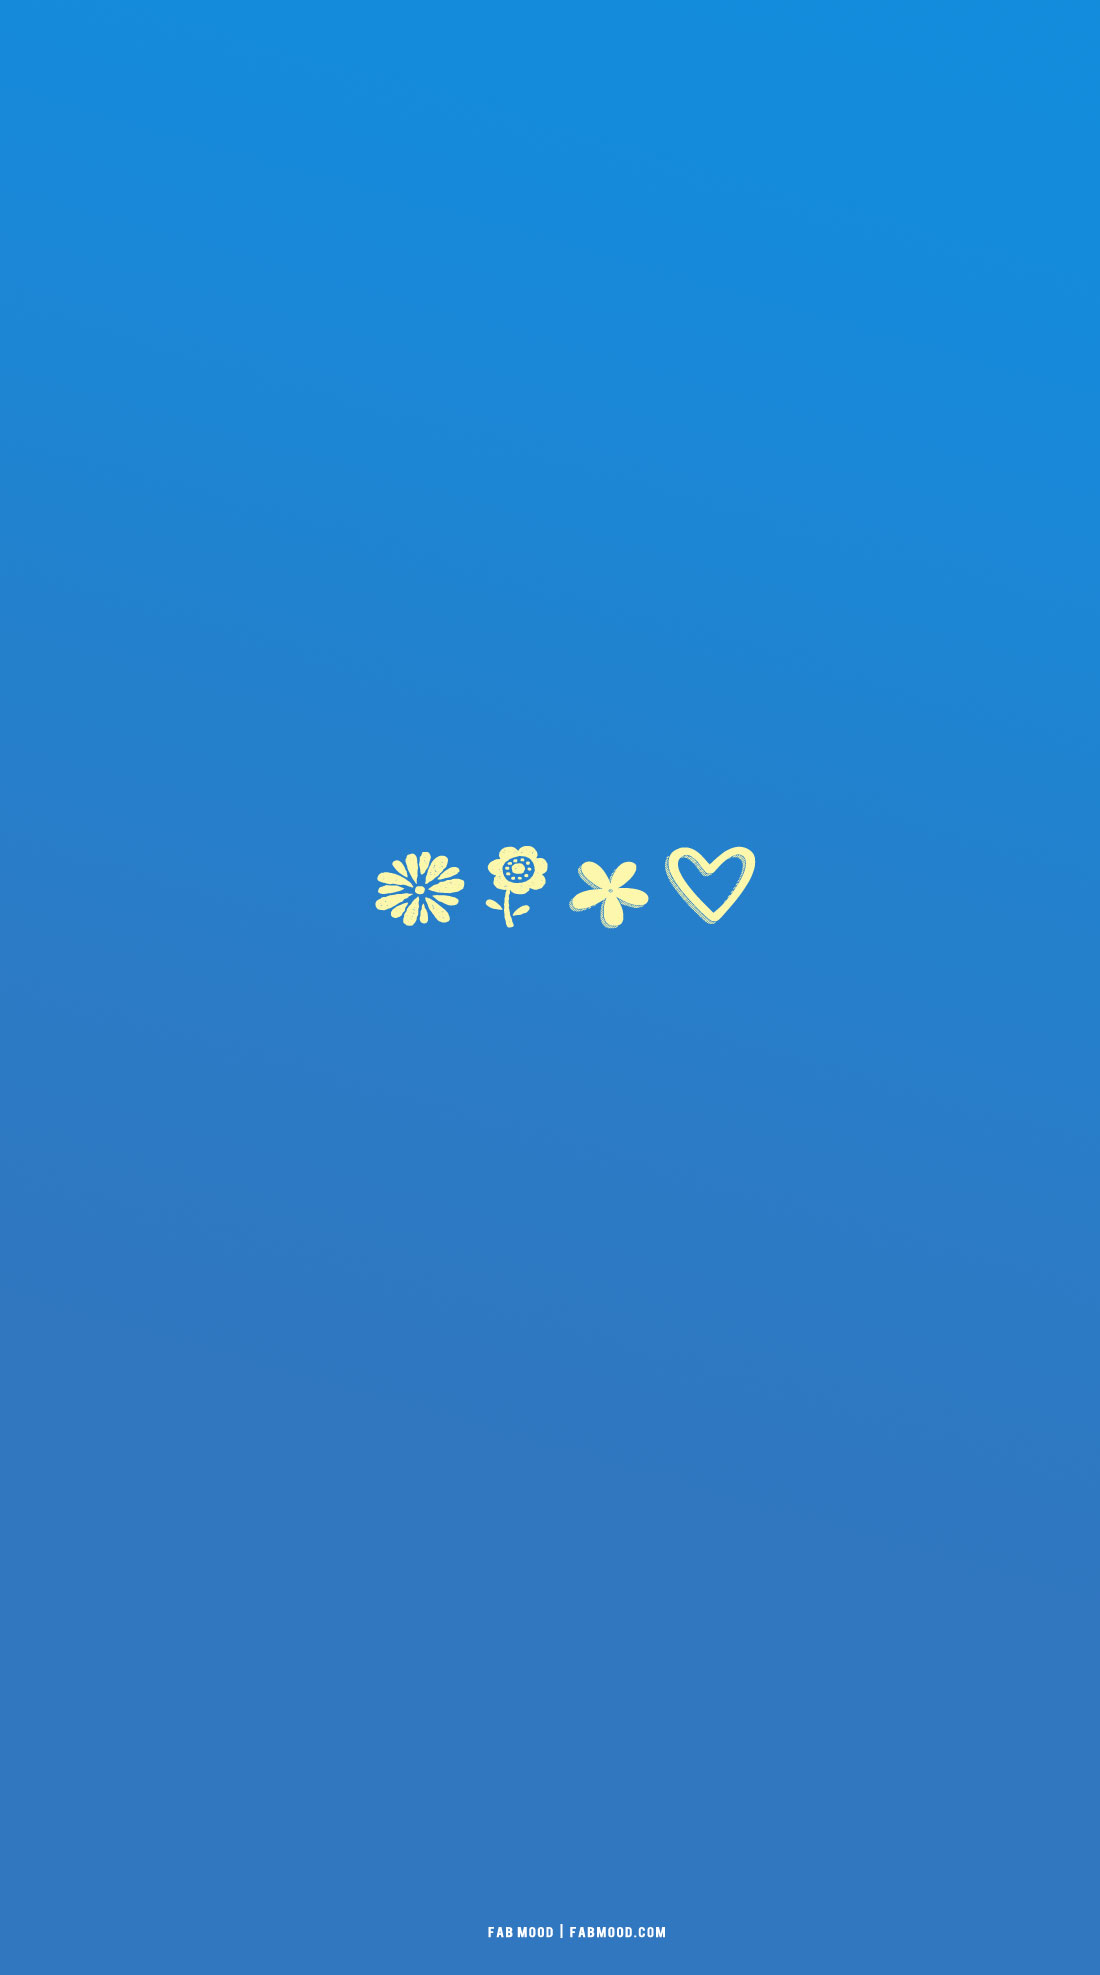 Azure Blue Wallpaper For Phone, Pastel Yellow Flower & Heart